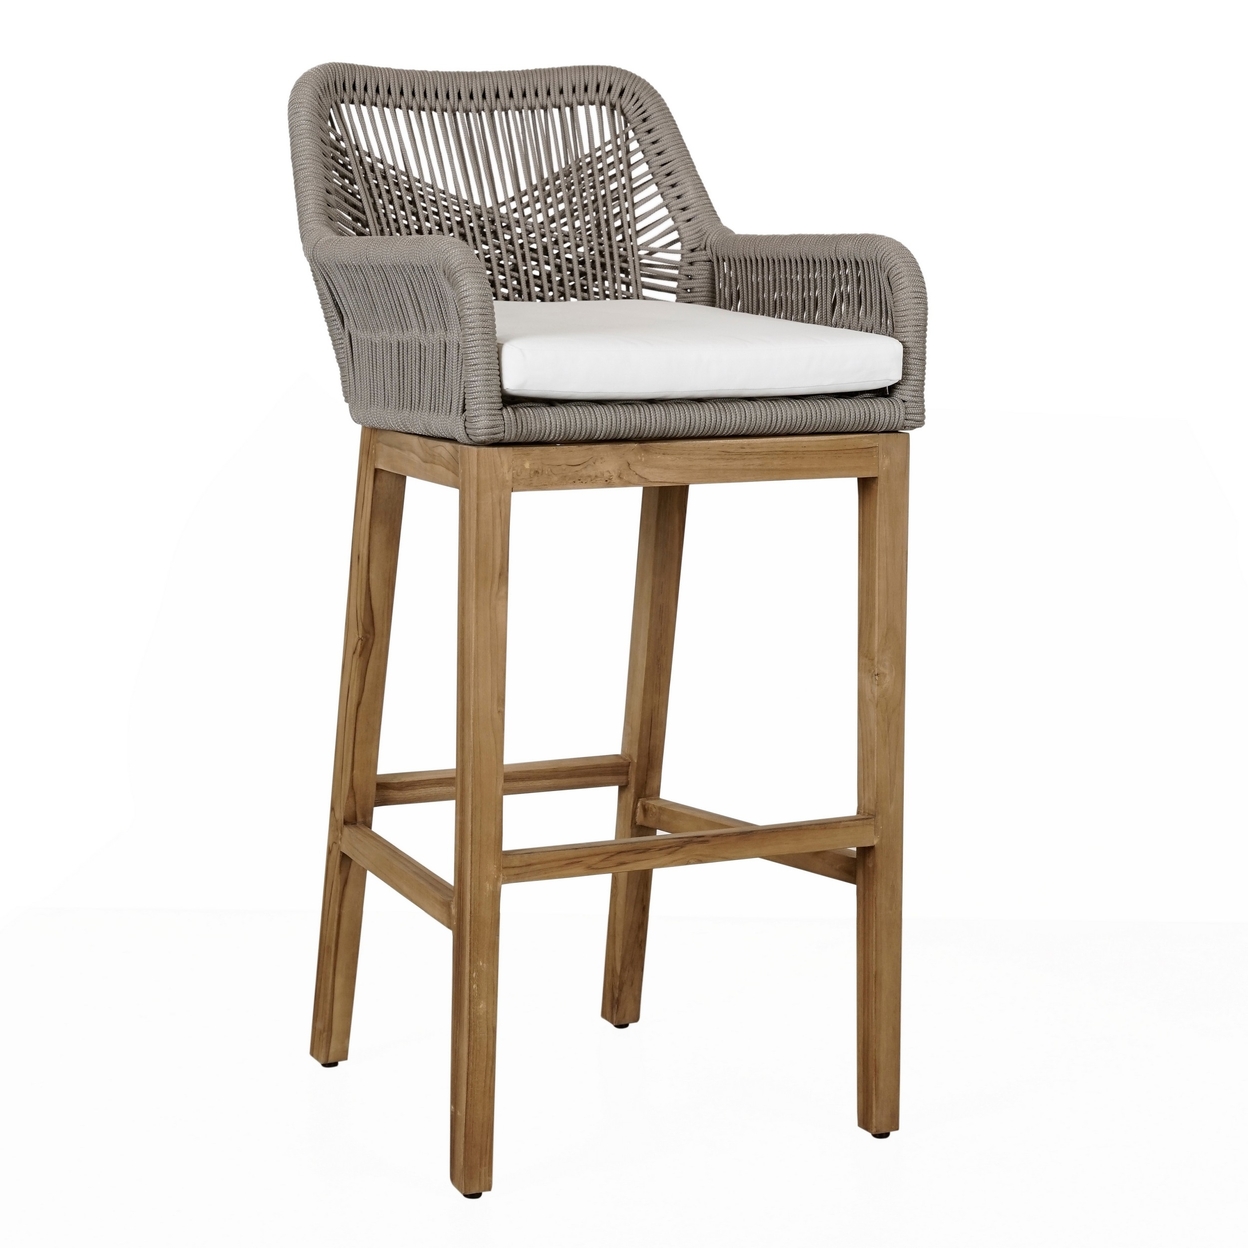 Navi 33 Inch Outdoor Barstool Chair, Woven Rope Crossed, Gray, Brown Teak -Saltoro Sherpi